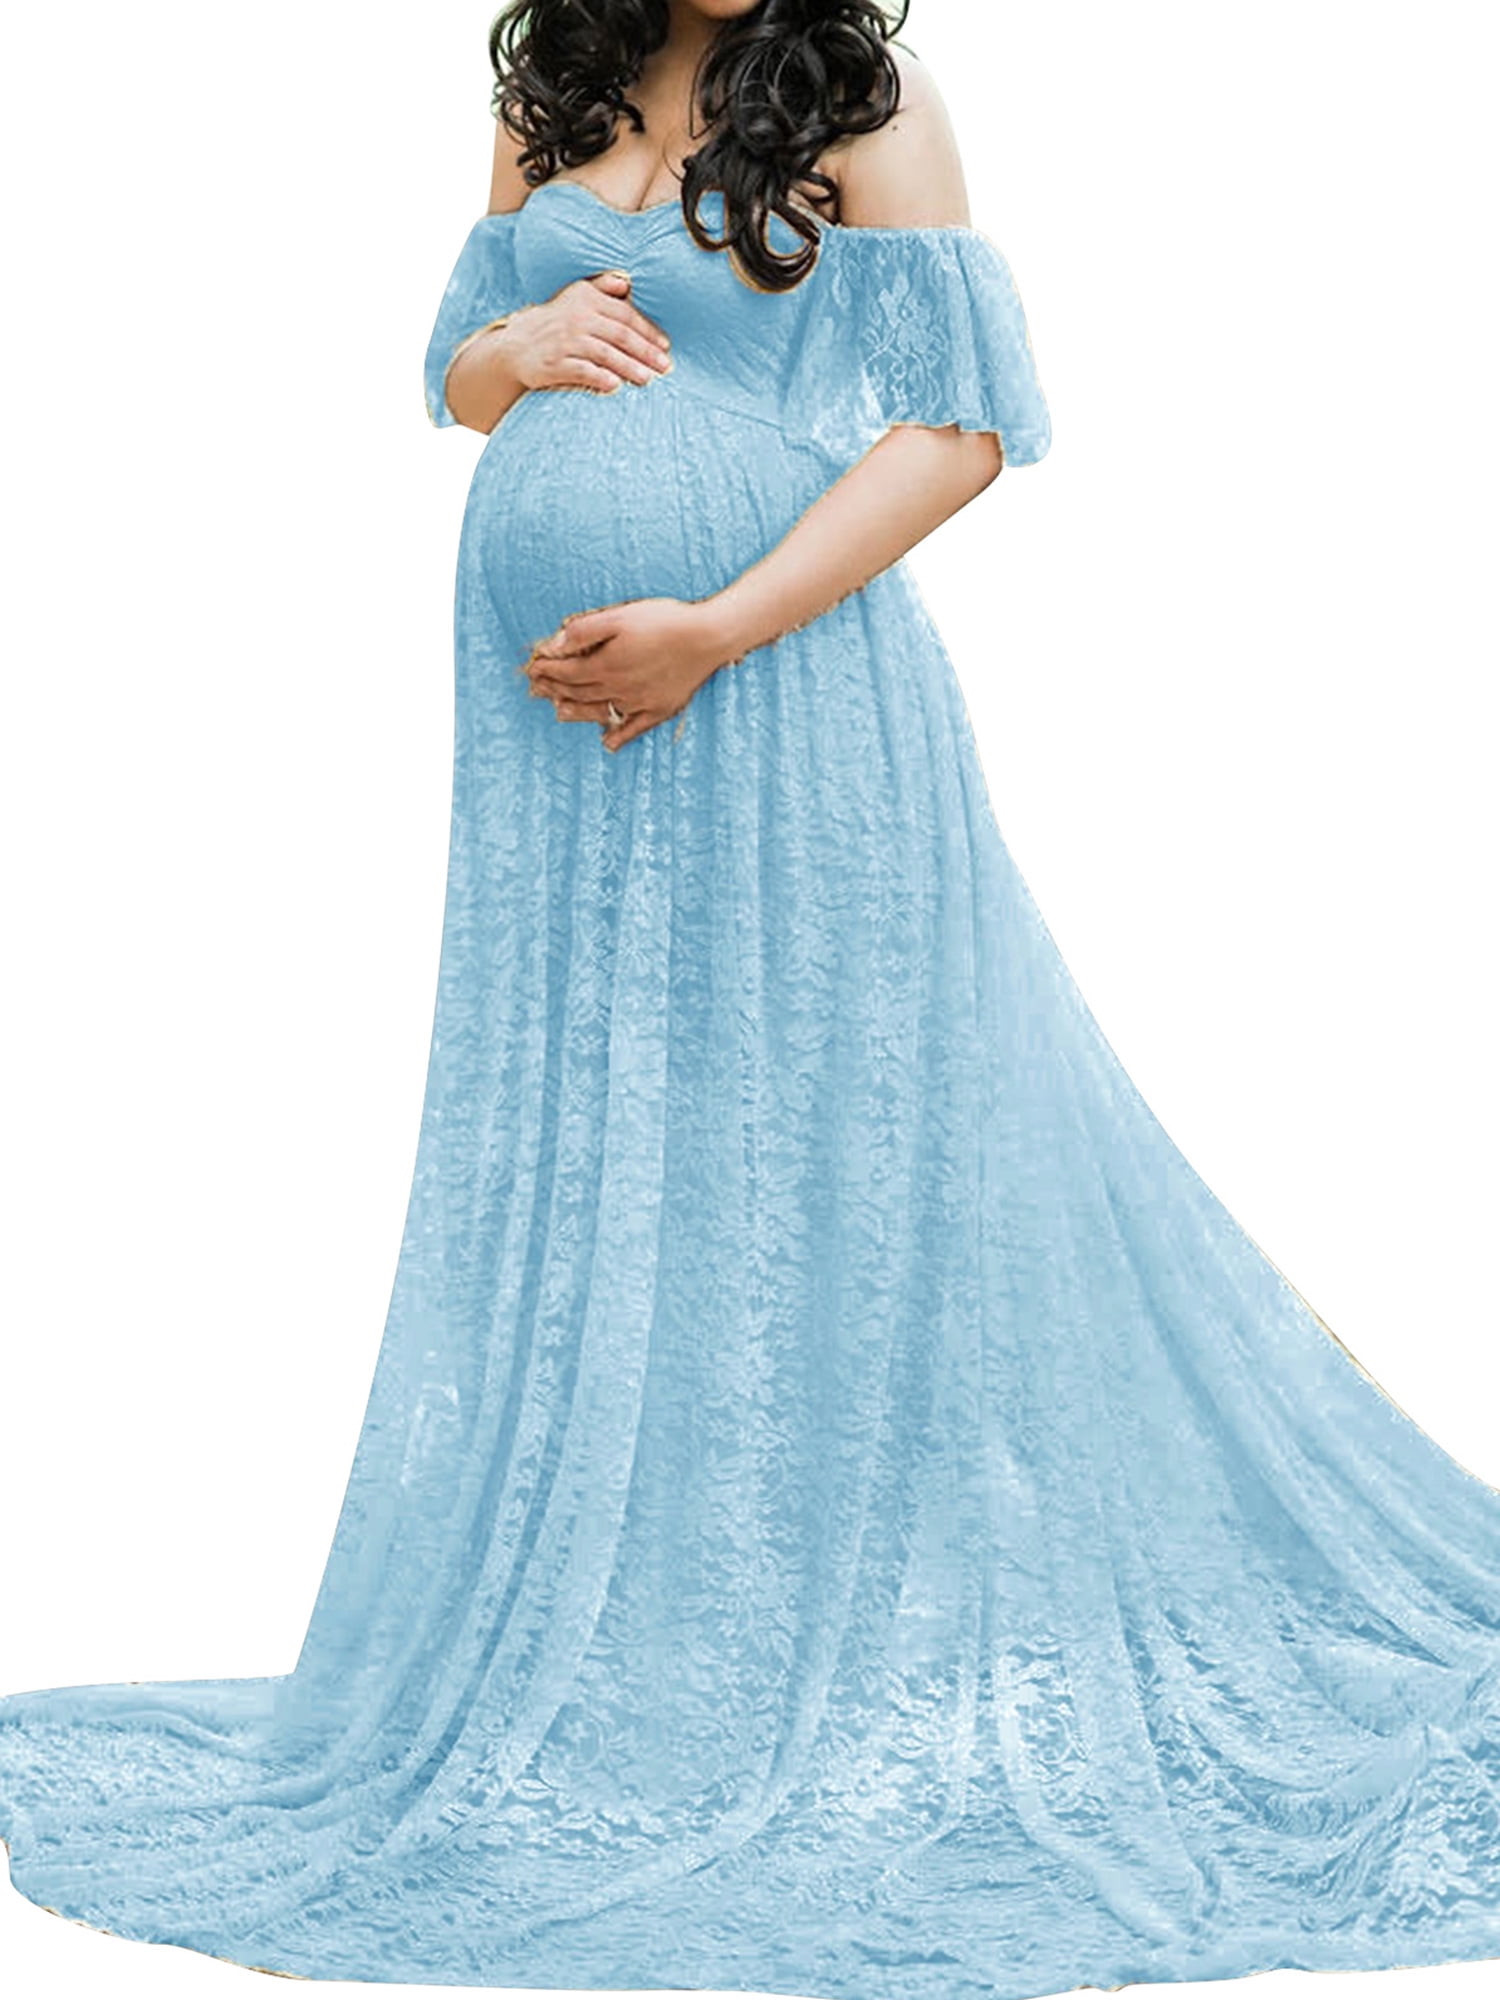 Women s Maternity Dress Off Shoulder Lace Maxi Dress Elegant Baby Shower Photography Dress c068d4a7 c48c 417f badf d413ee55669e.0aa4ca68f488e0b234c43fbe3757a559